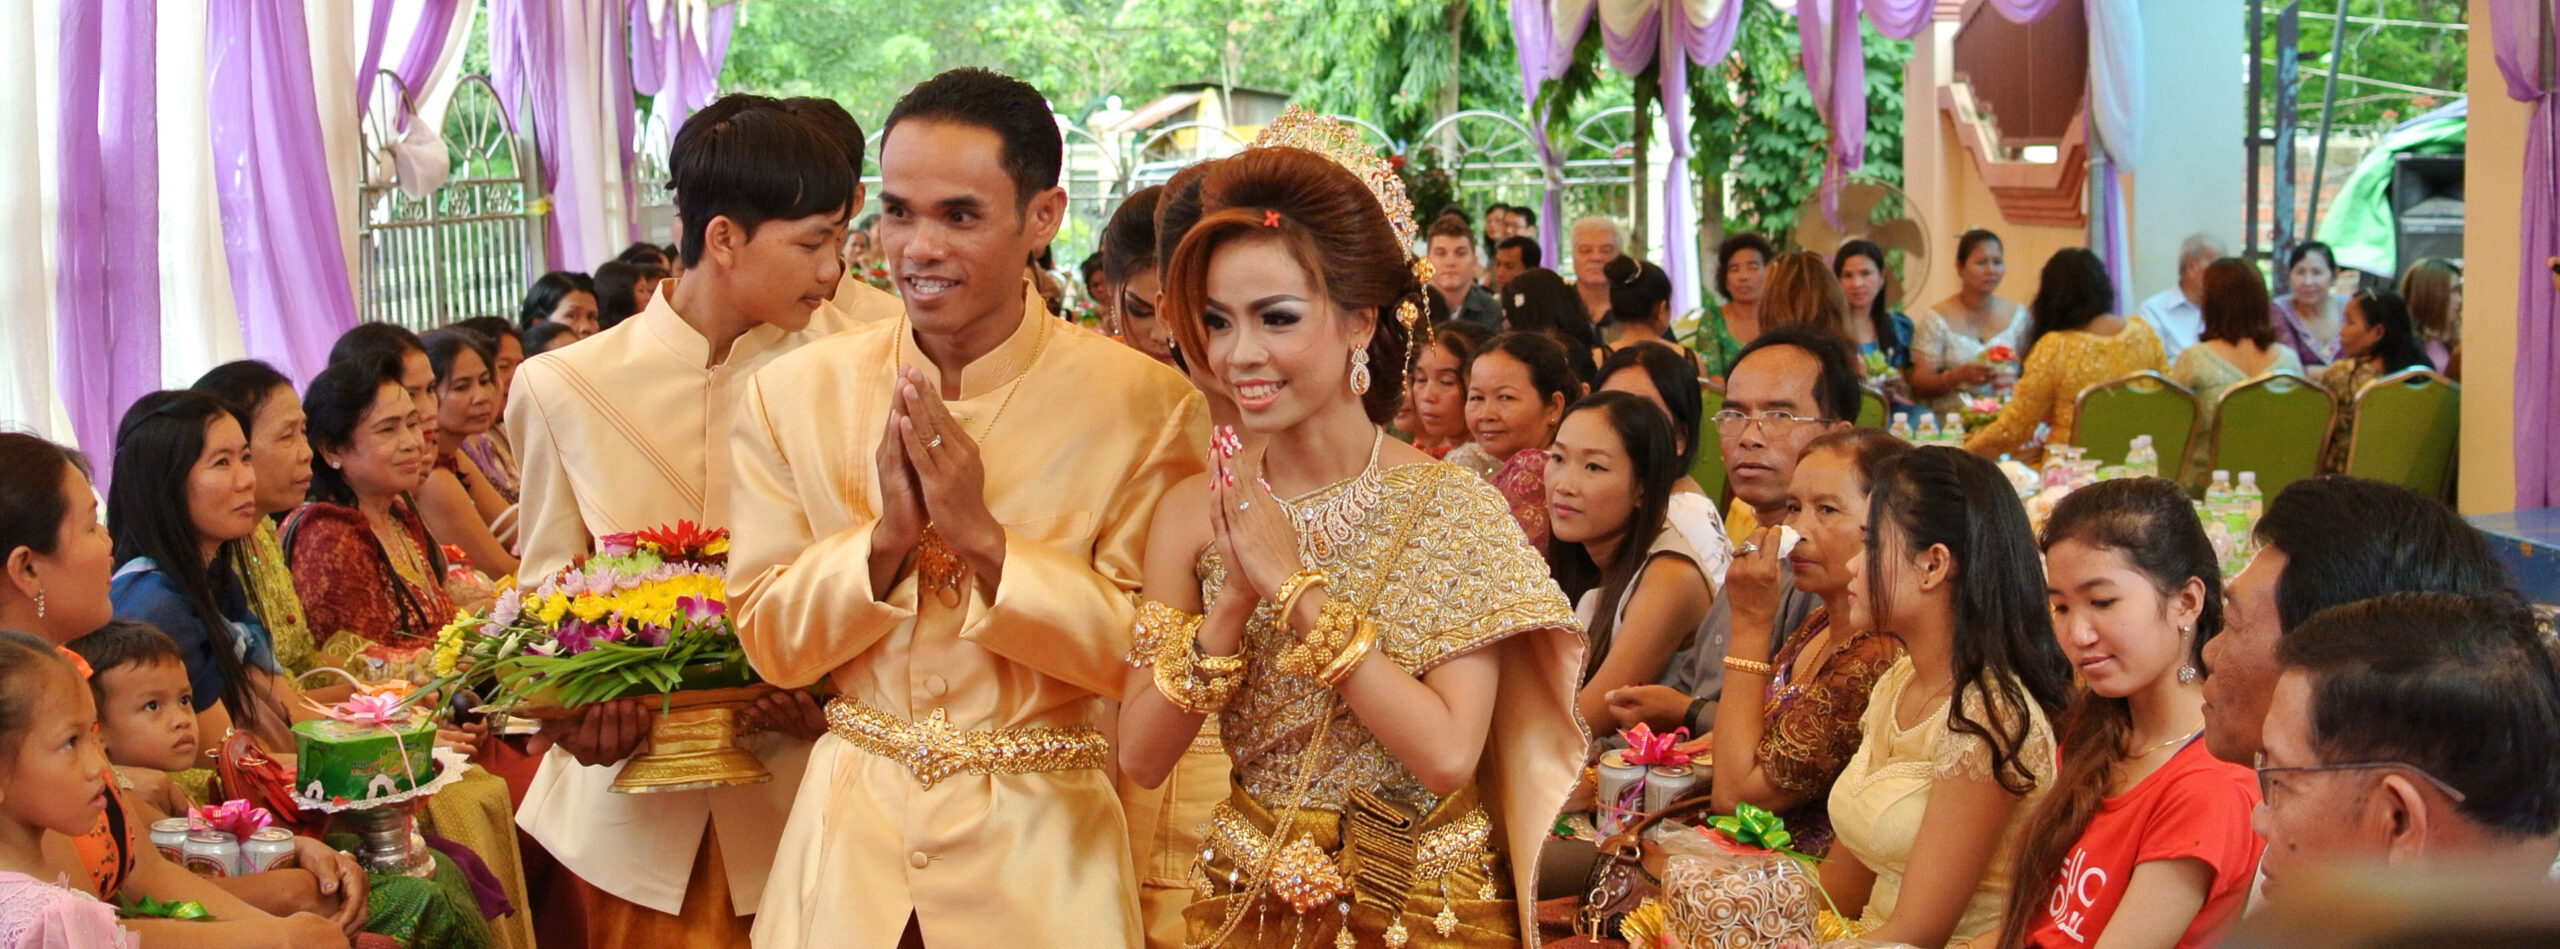 Mariage Cambodge